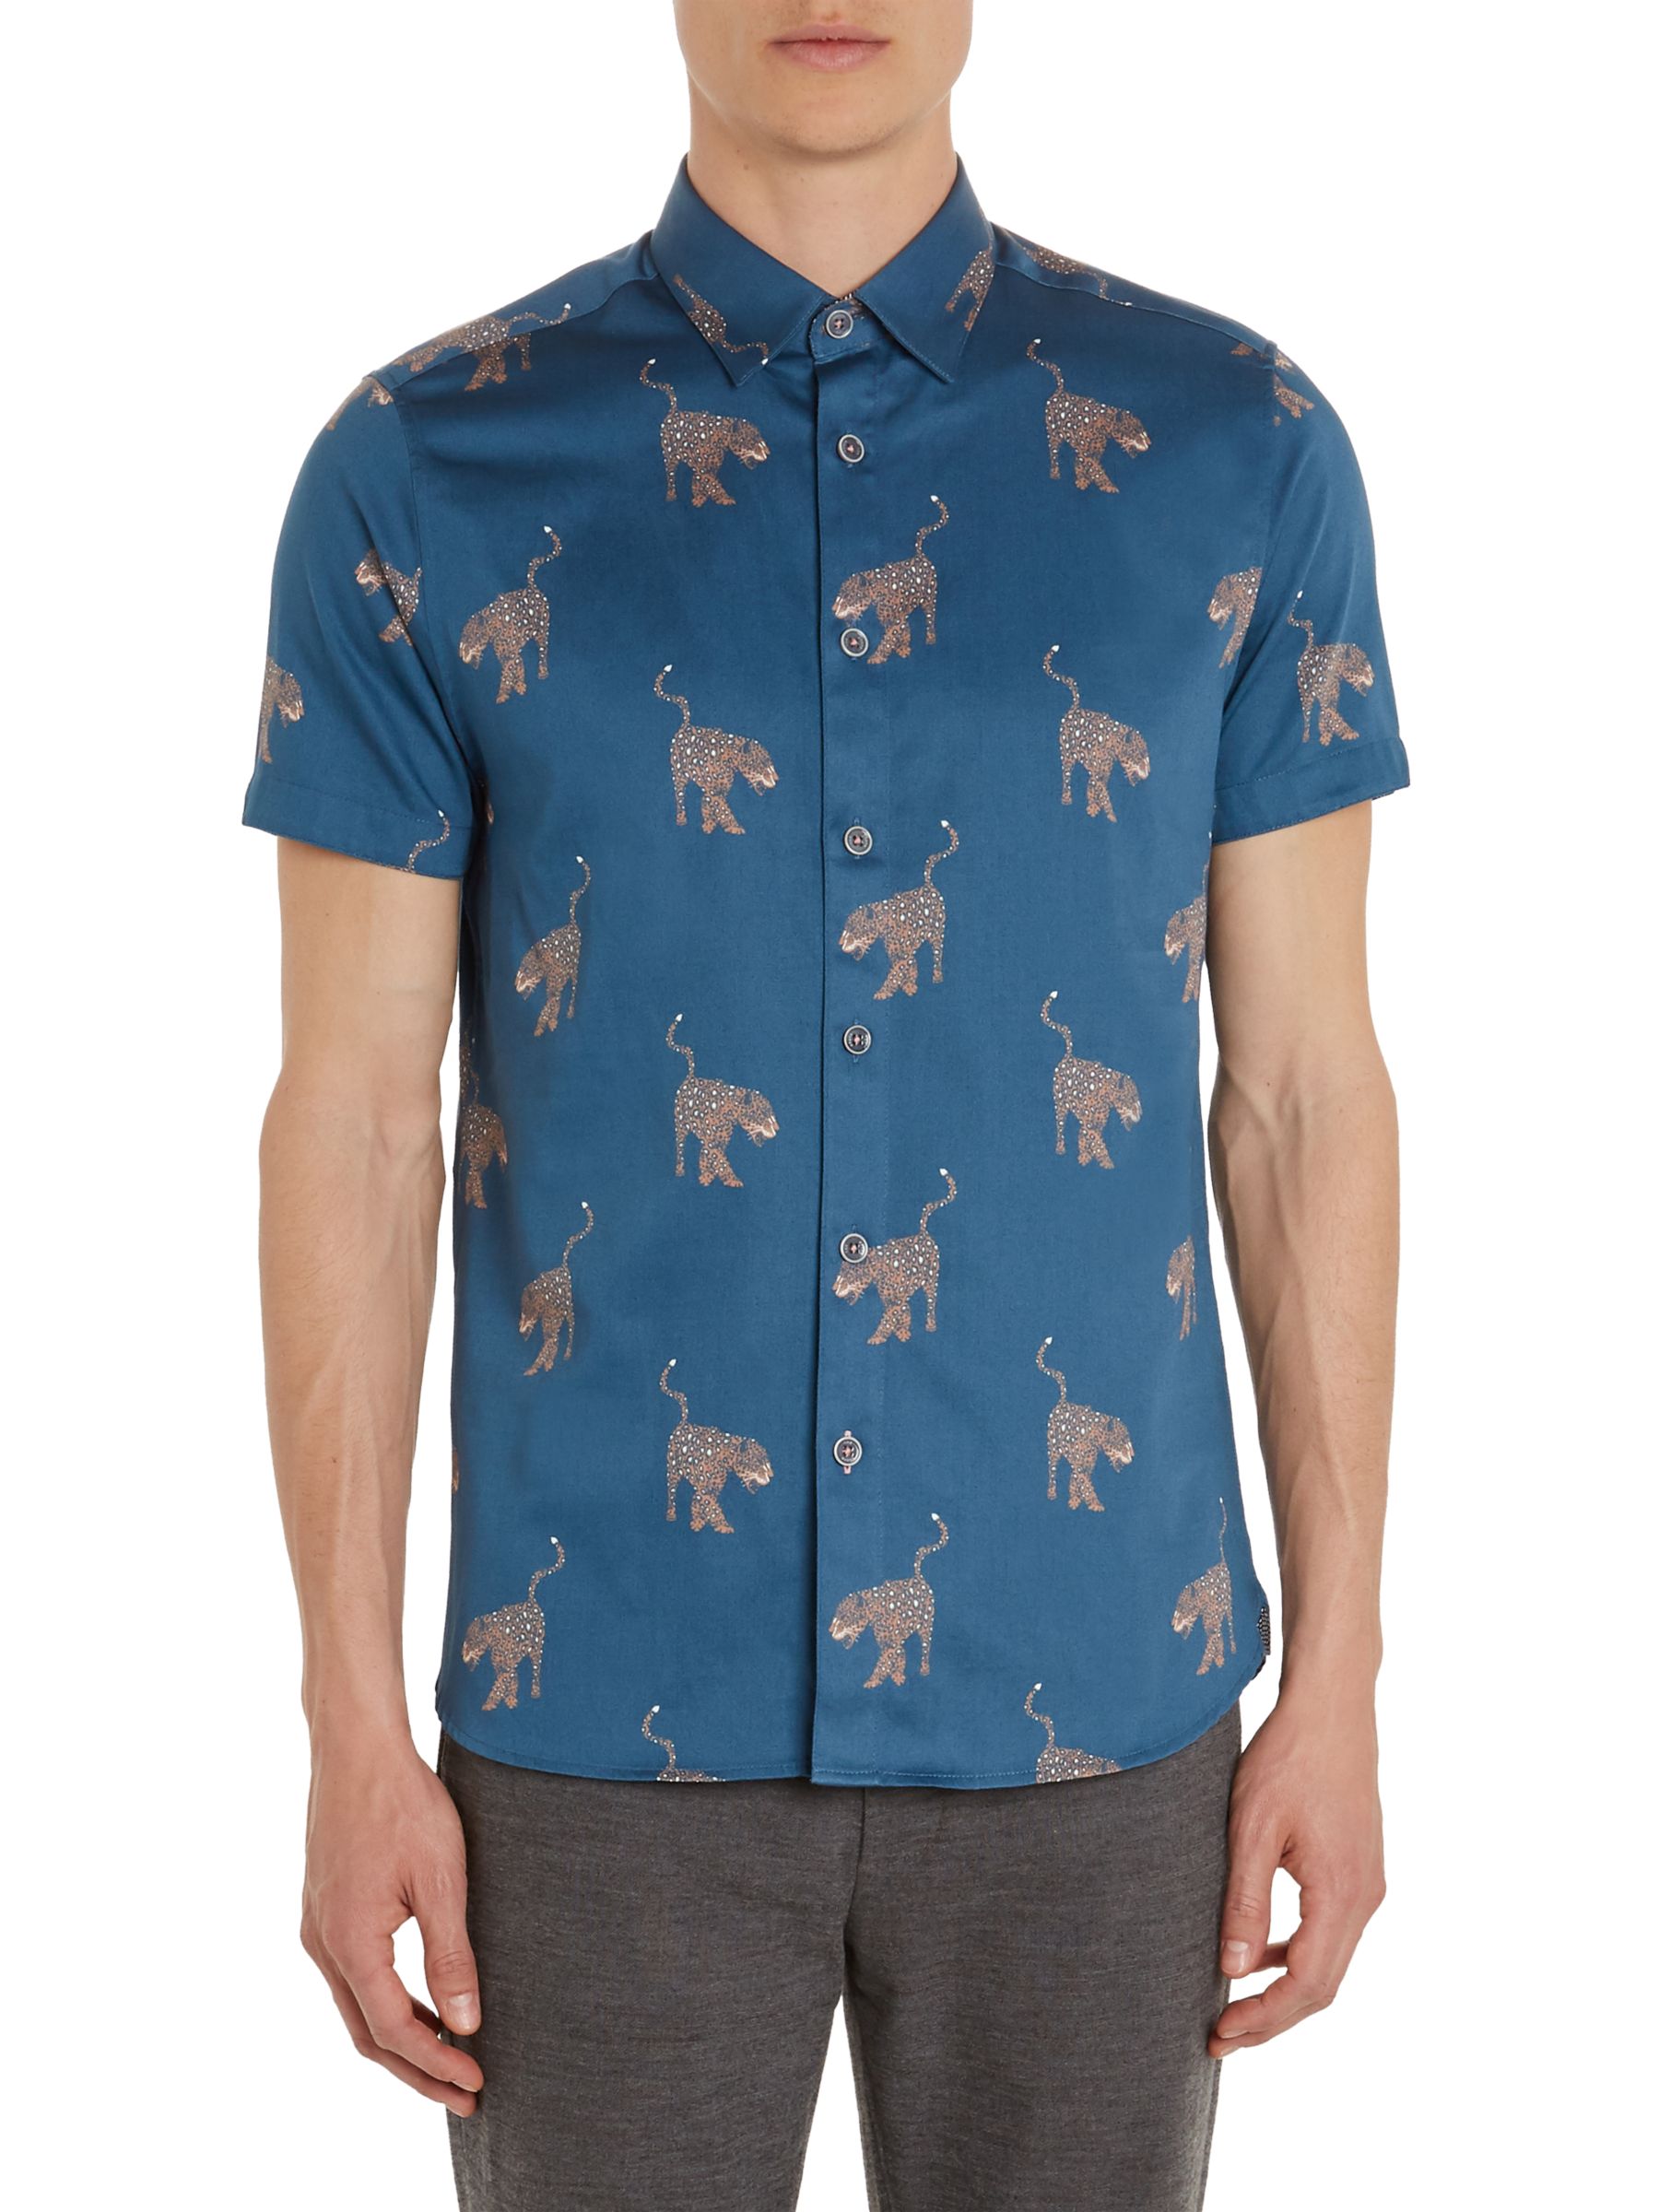 Ted Baker Santha Panther Print Cotton Shirt, Blue/Multi